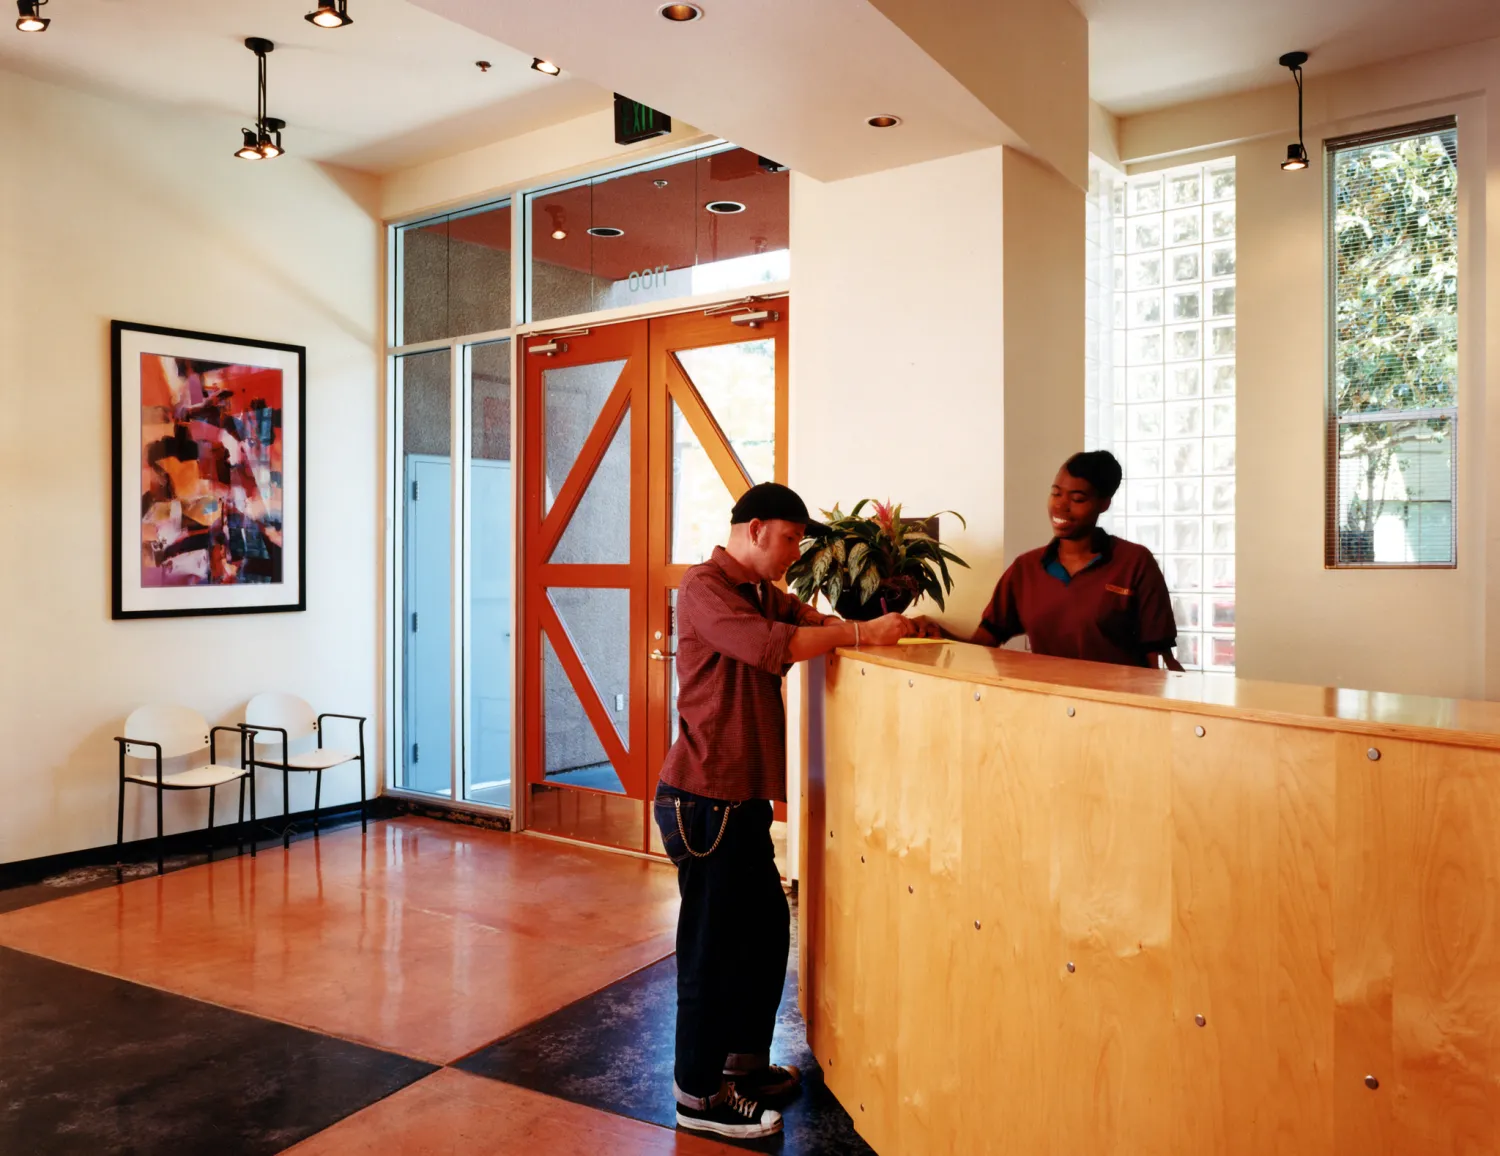 Entry lobby and reception desk at Pensione K in Sacramento, California.